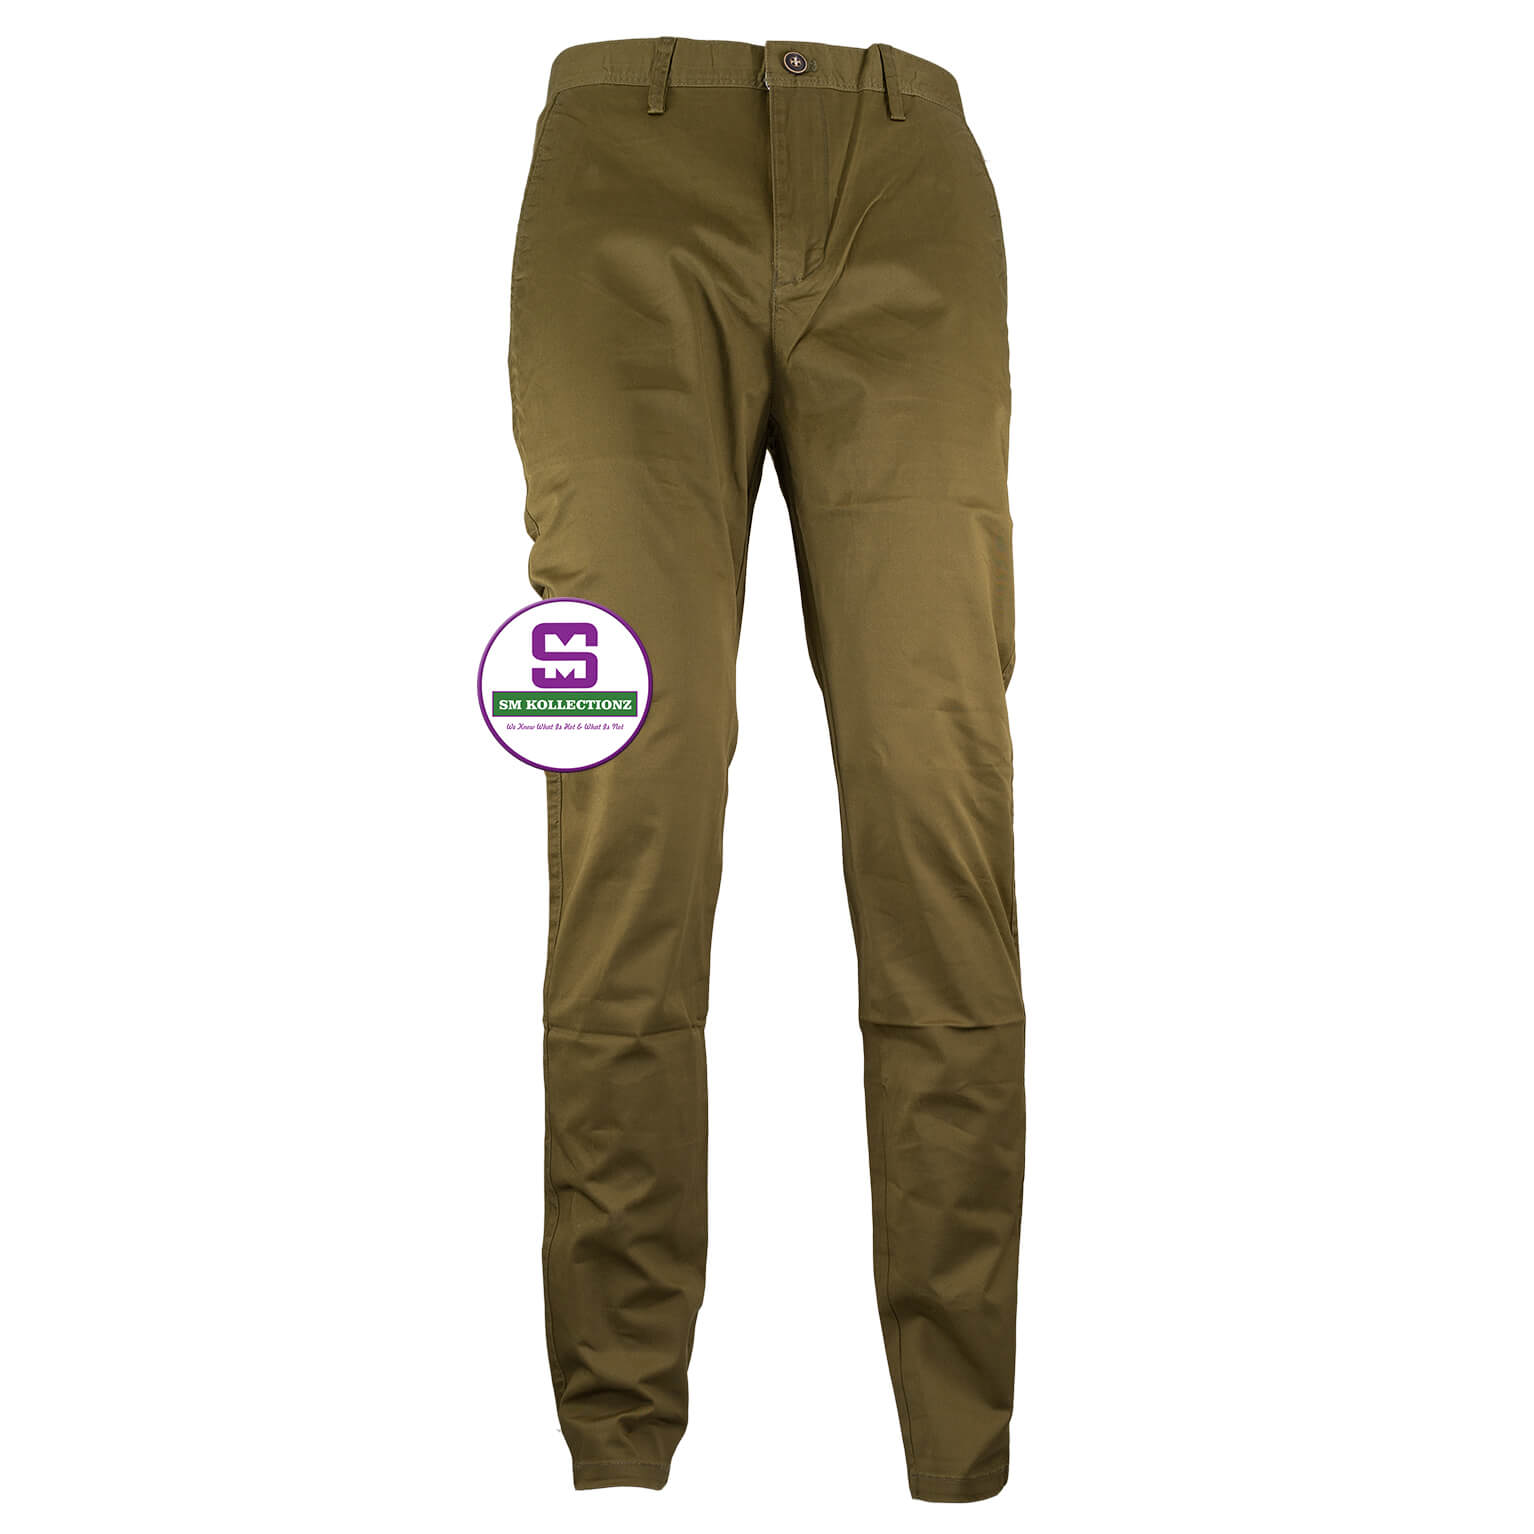 What to wear with khaki pants for ladies - Tuko.co.ke